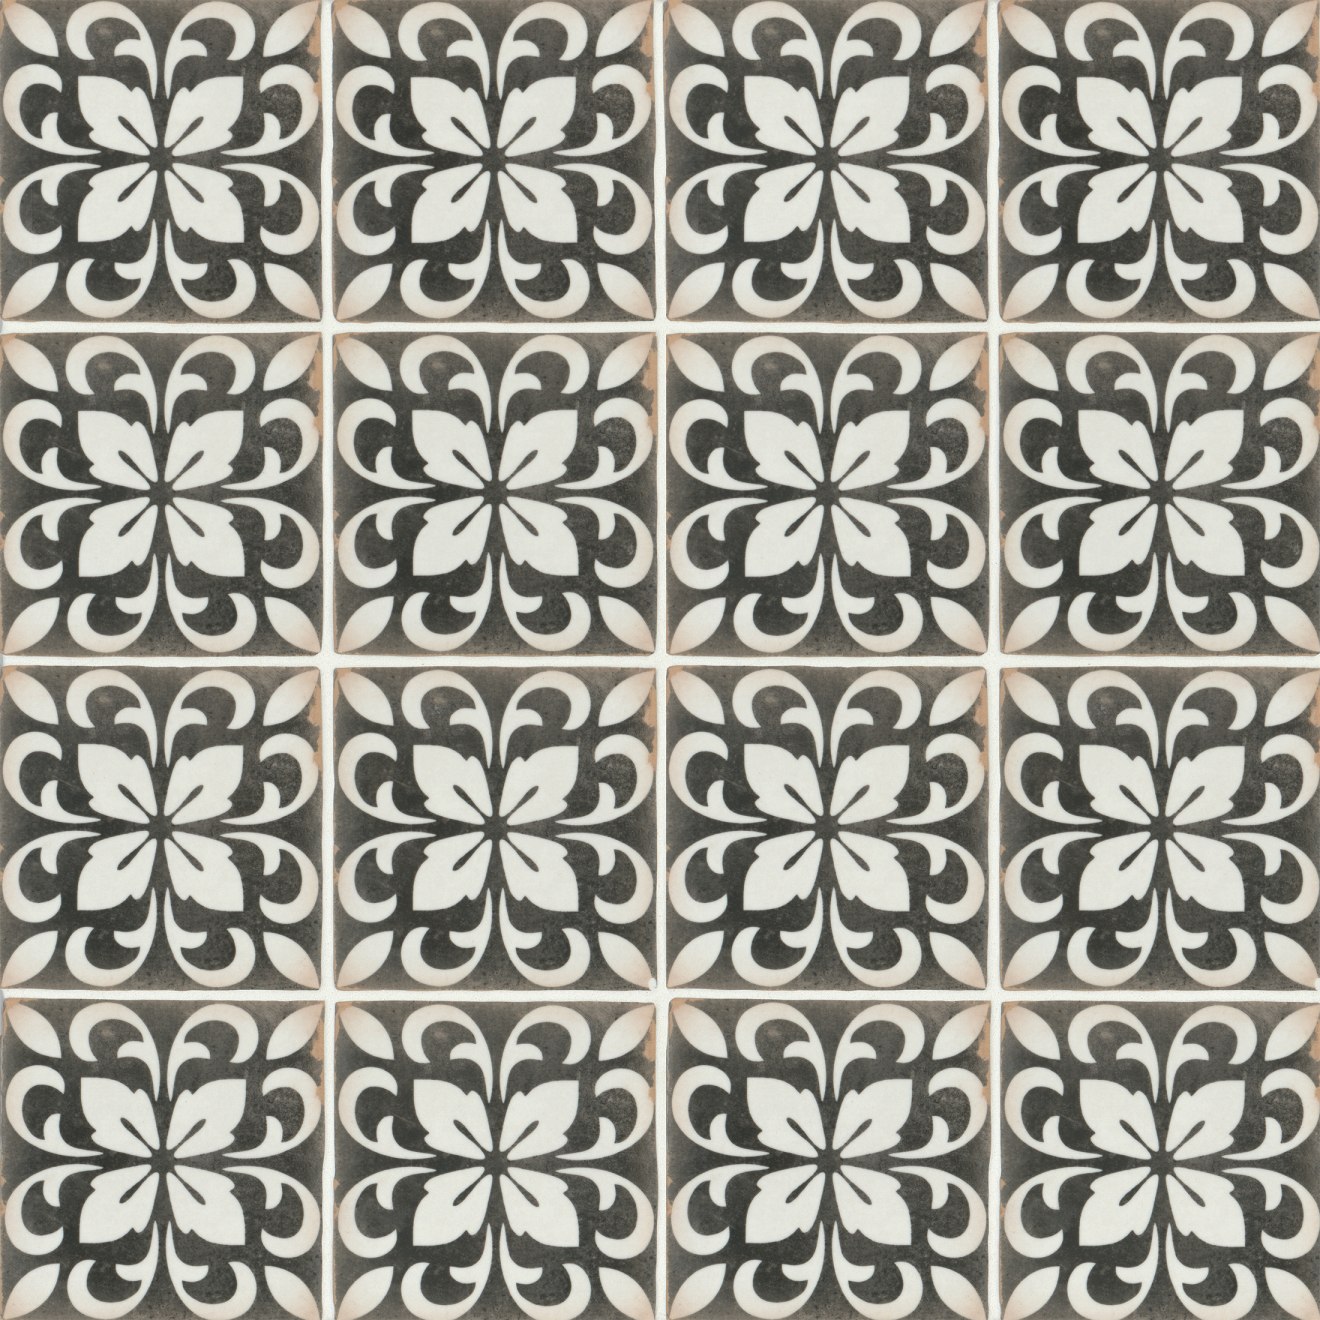 Qube Tiles Arte 6 x 6 Zellige Look Matte Subway Wall Tile